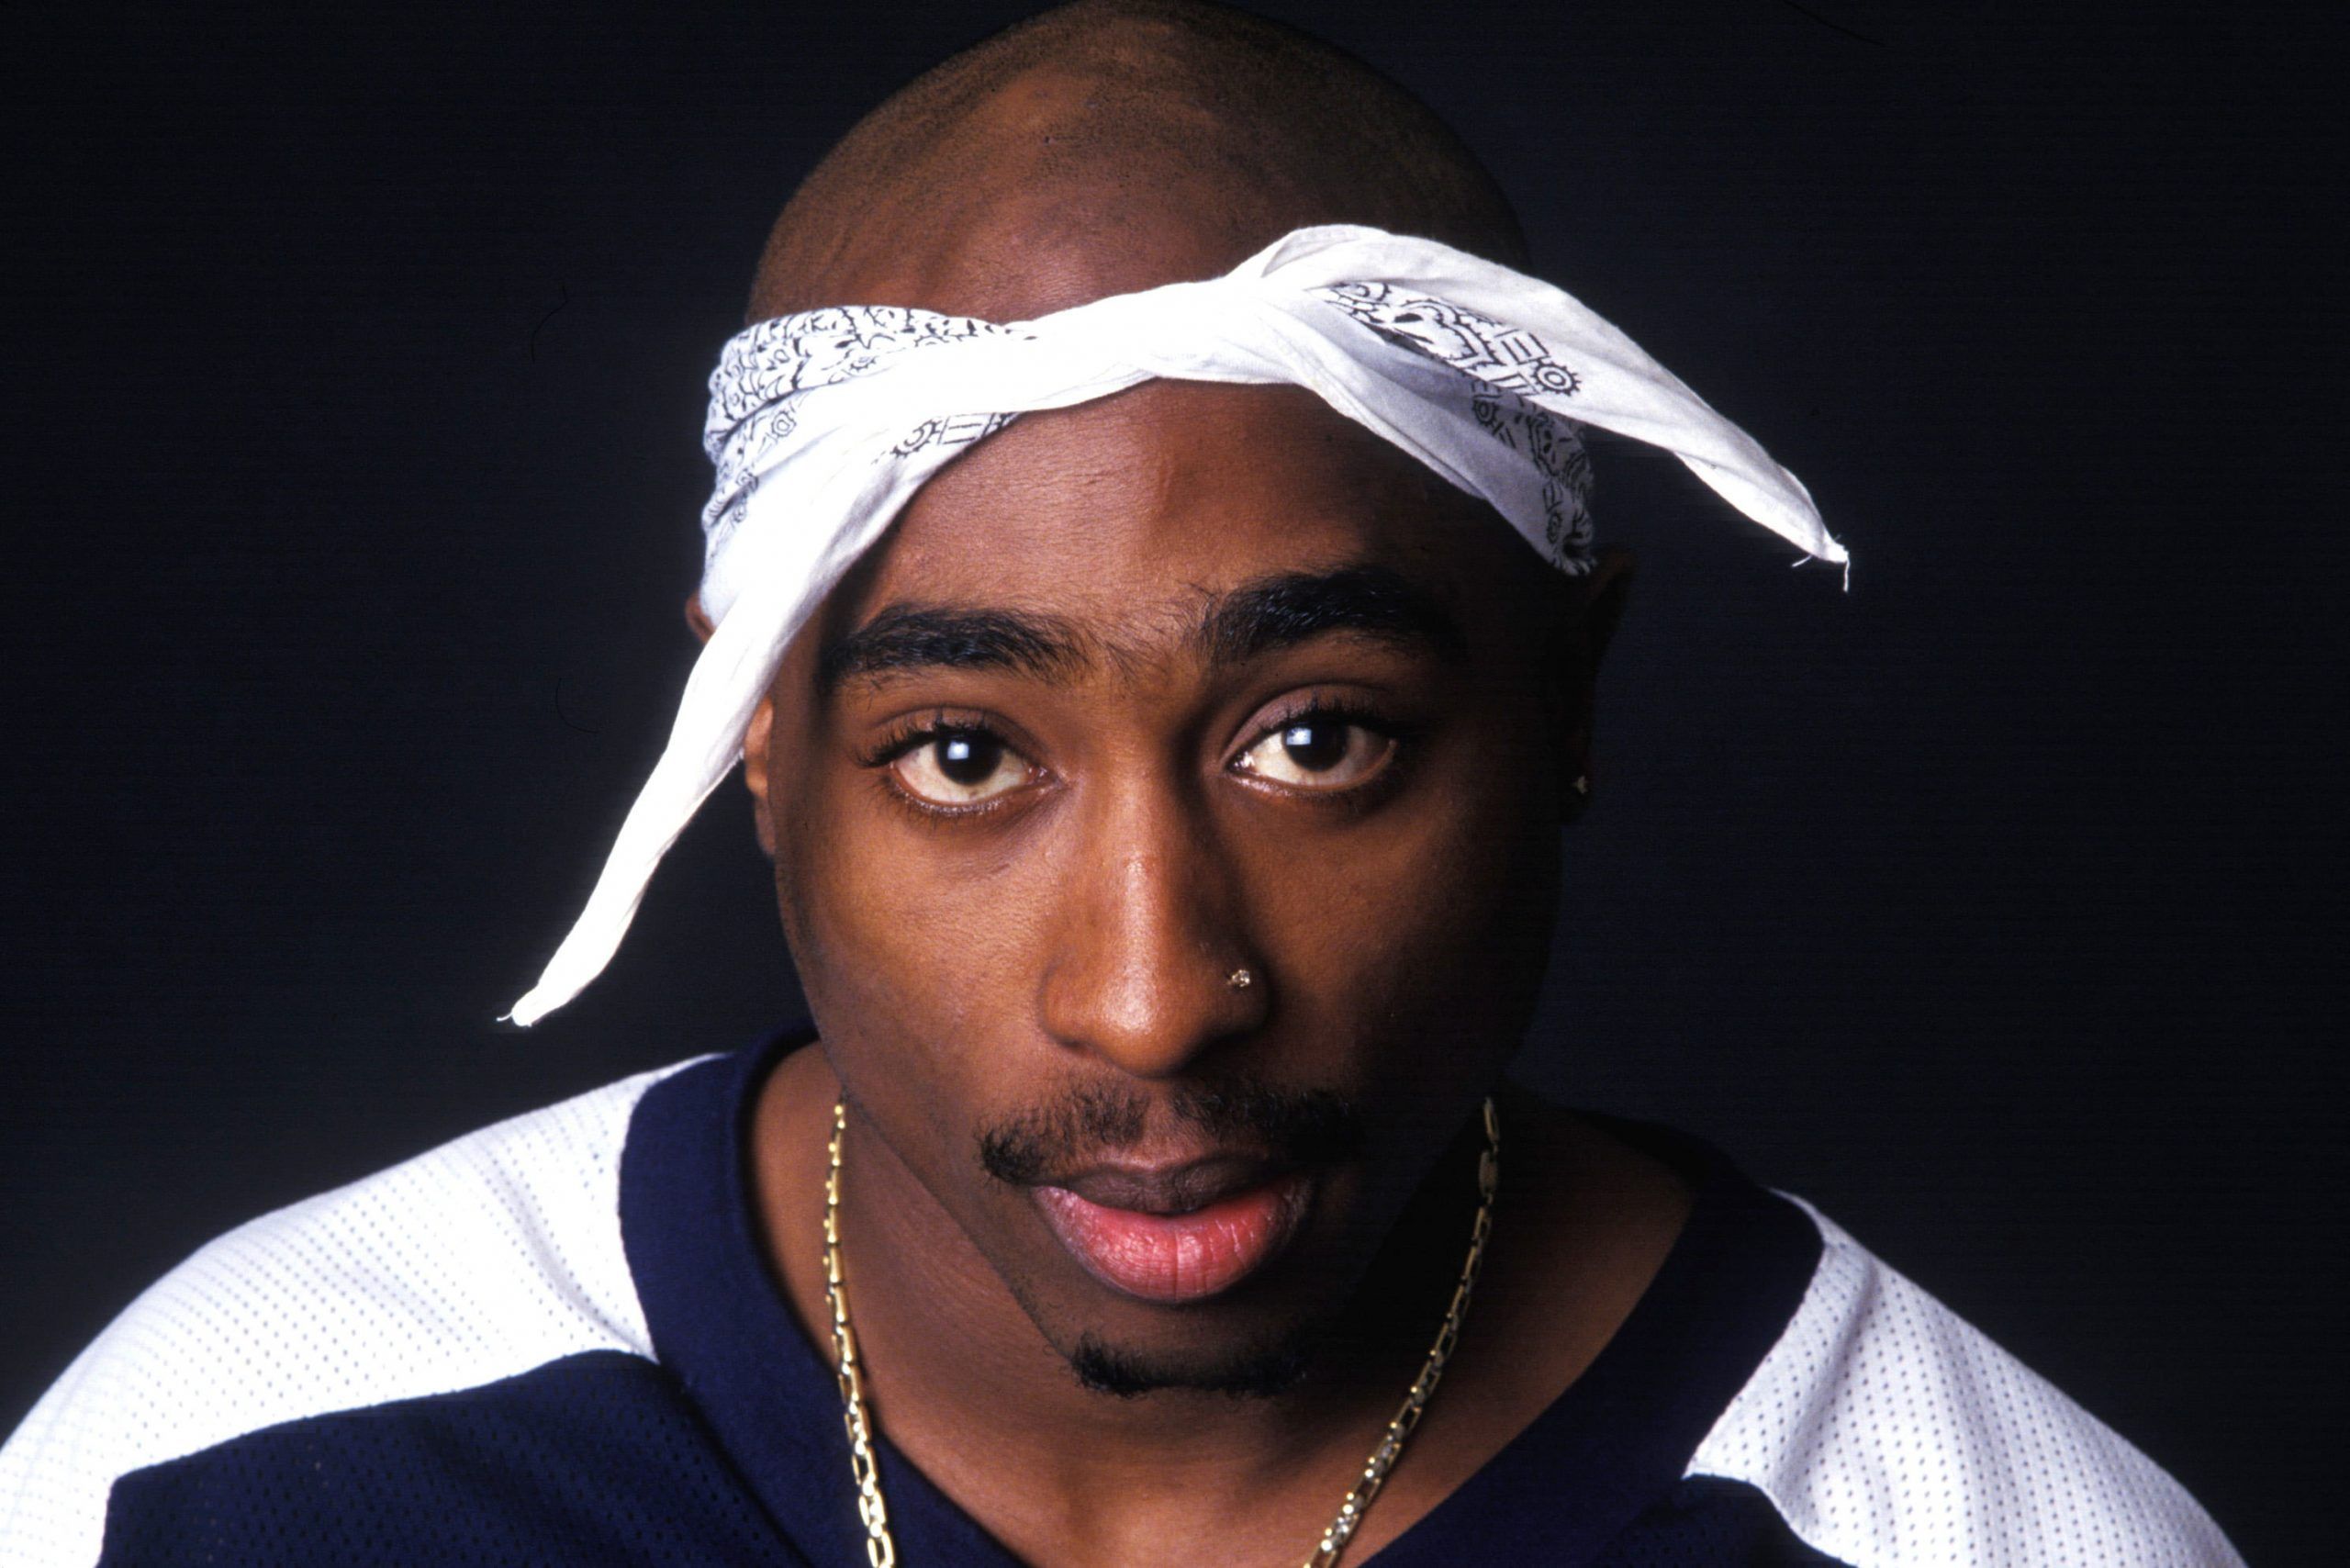 Tupac Shakur Wallpaper, Hip hop, actor, rapper, 2Pac, portrait • Wallpaper For You HD Wallpaper For Desktop & Mobile